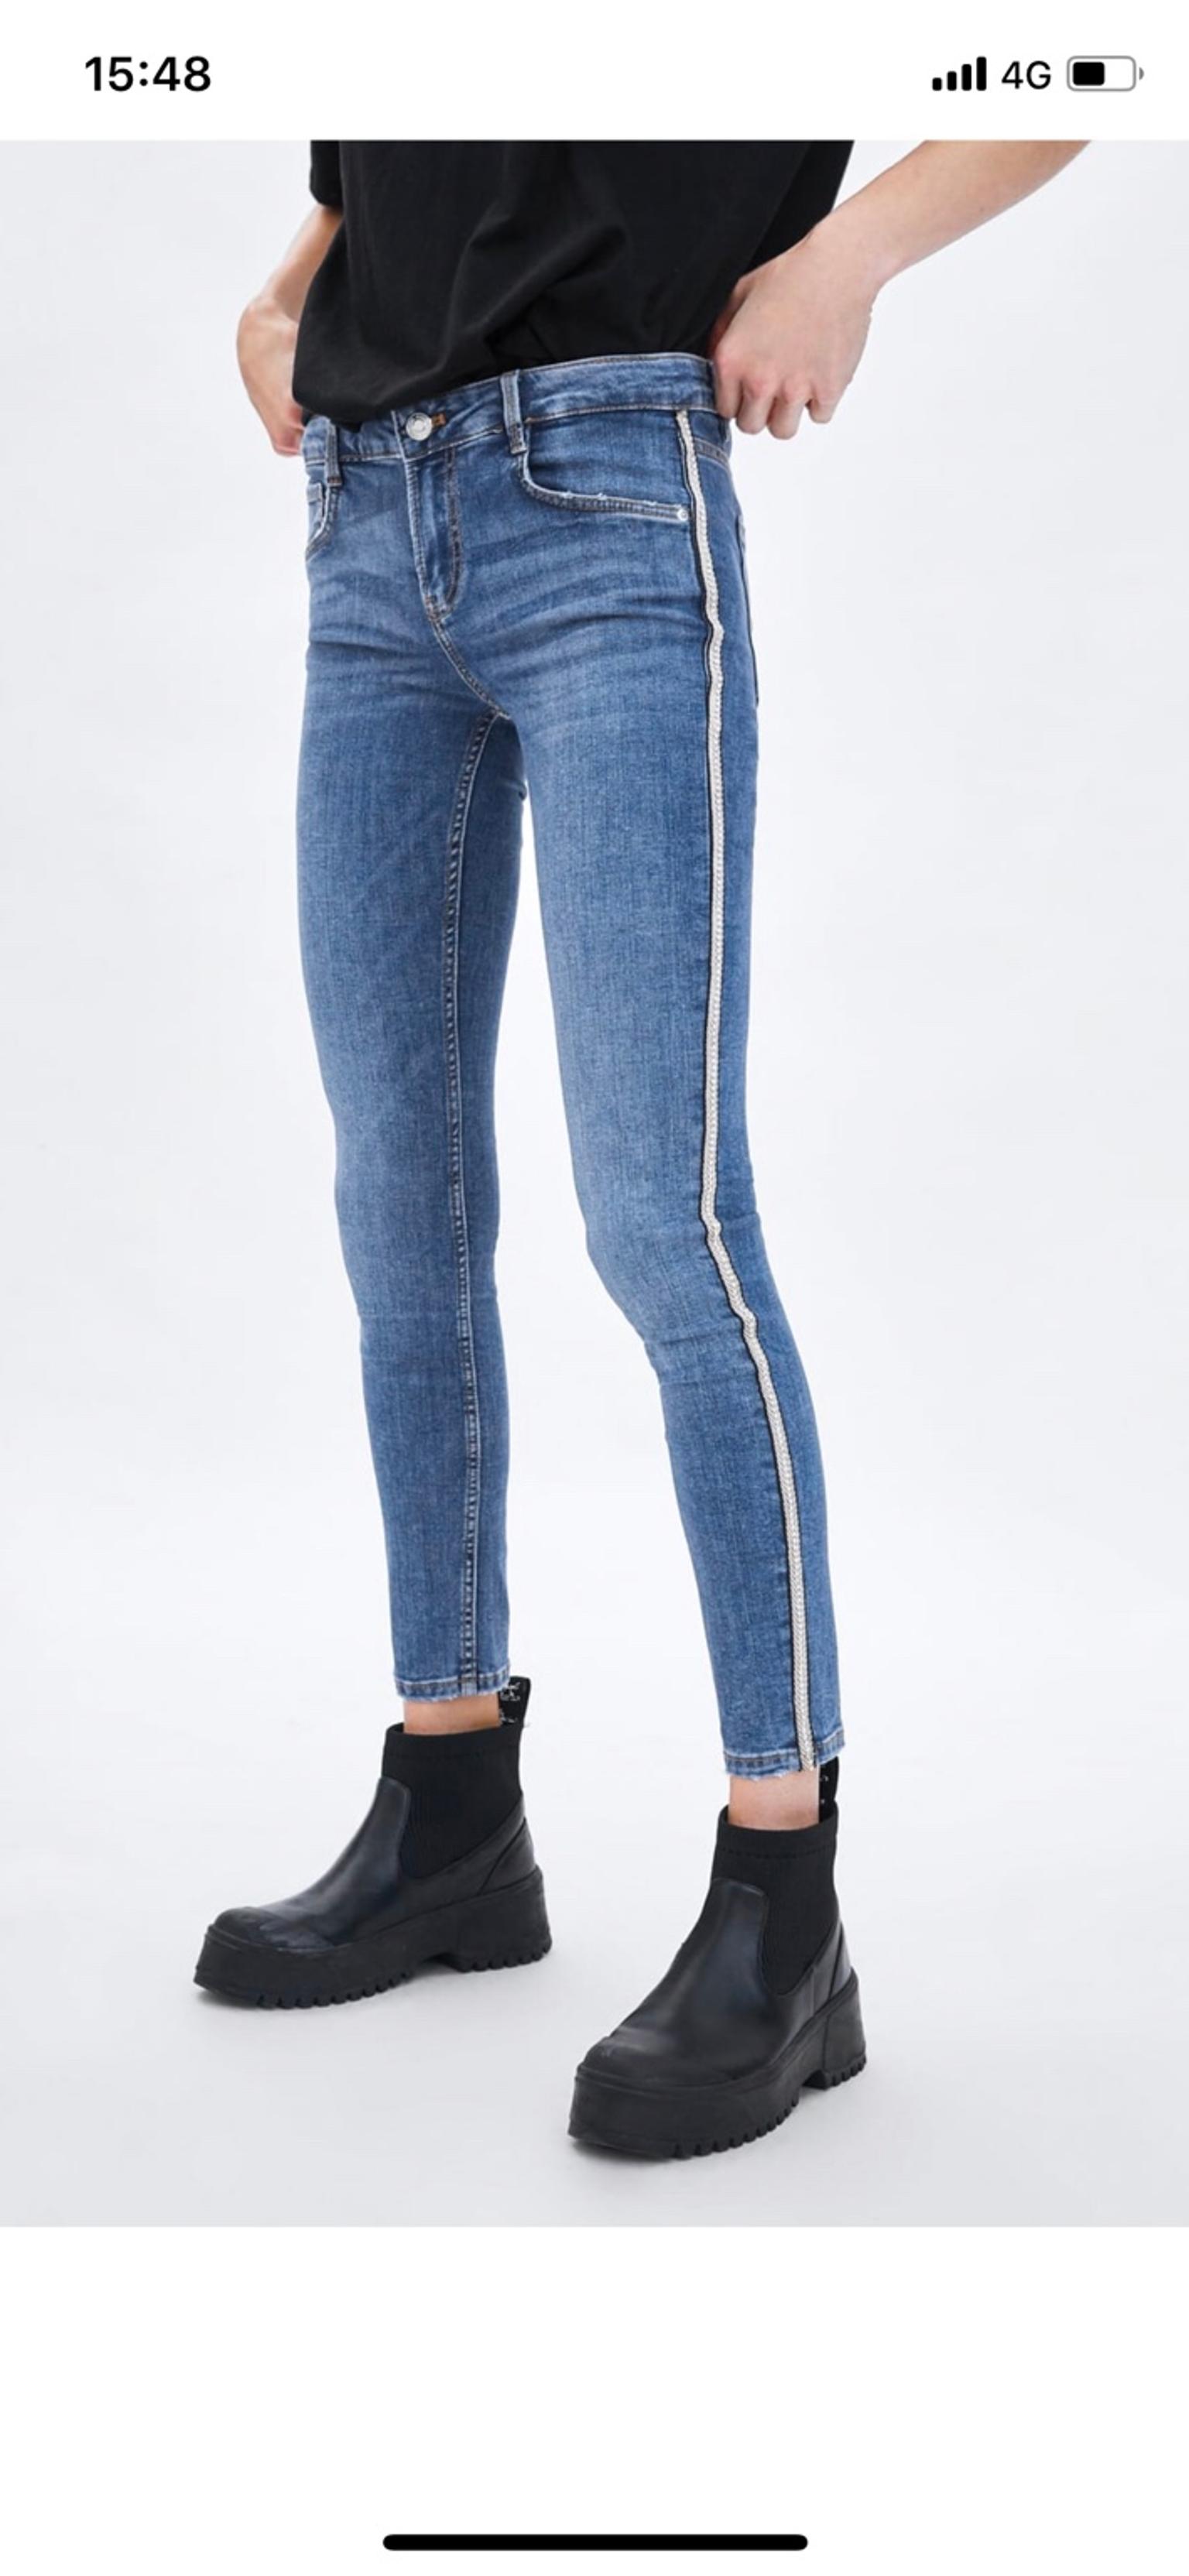 zara jeans with stripe on side